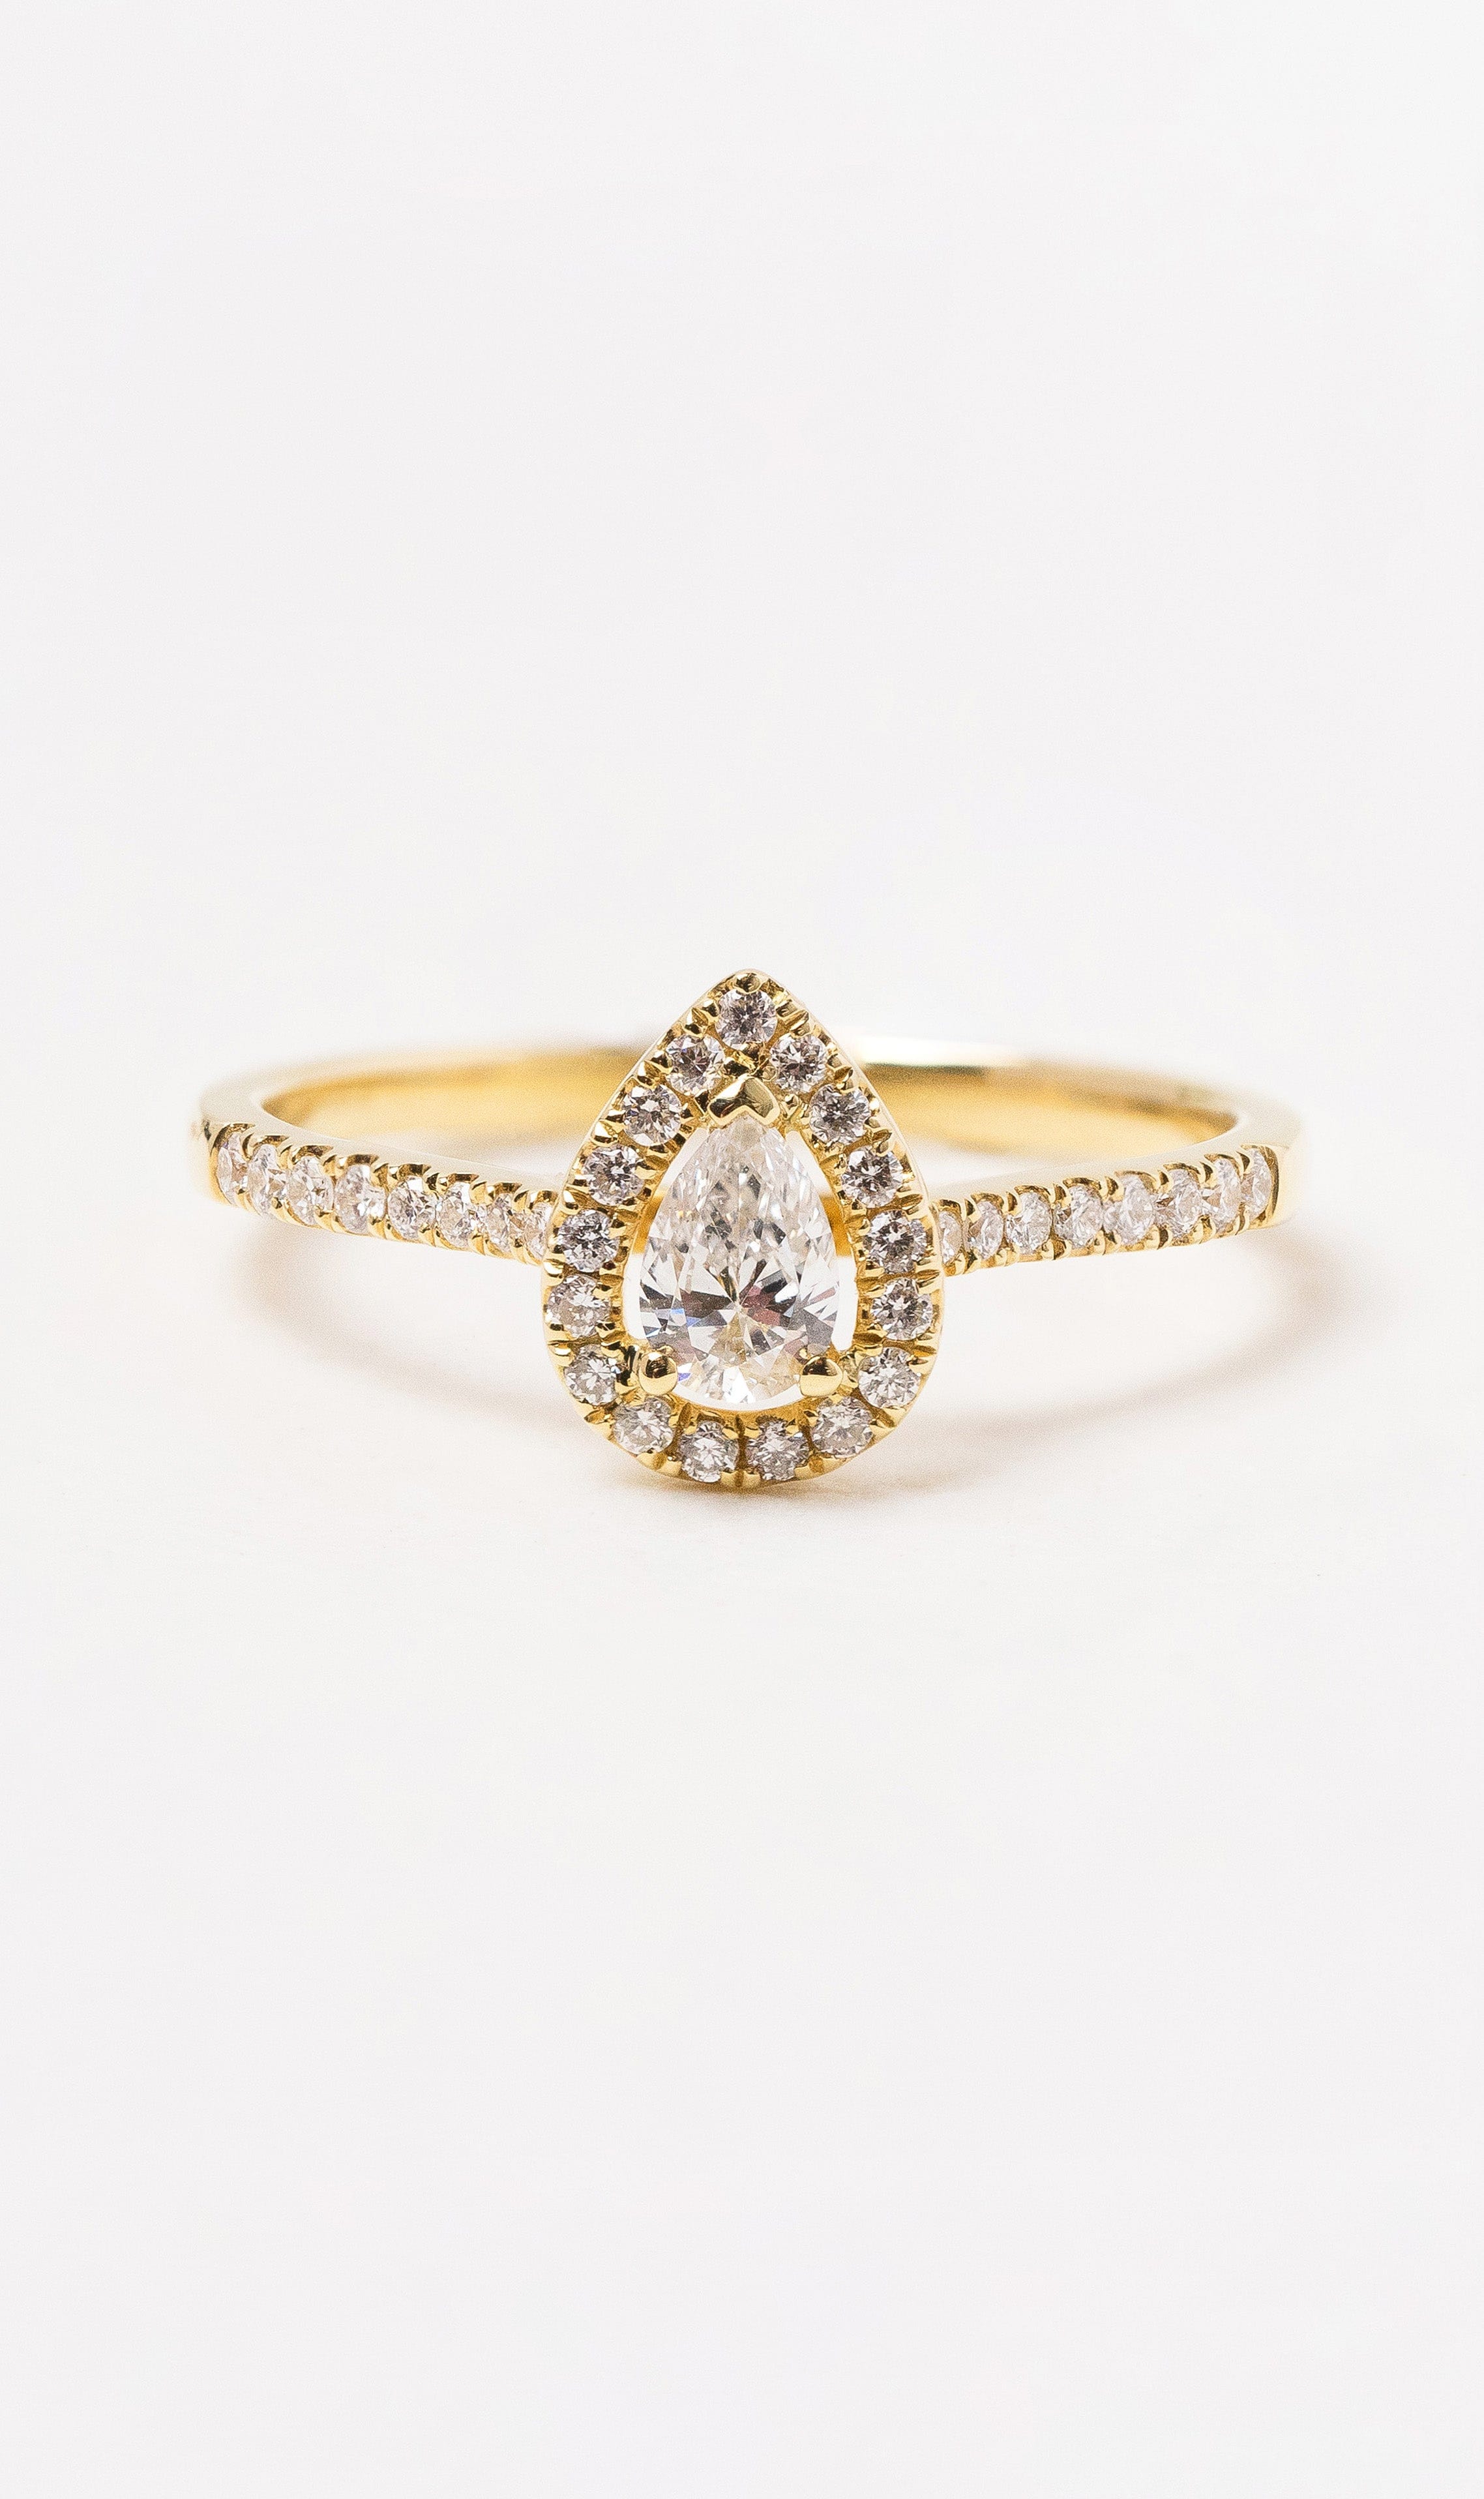 Hogans Family Jewellers 18K YG Pear Diamond Ring